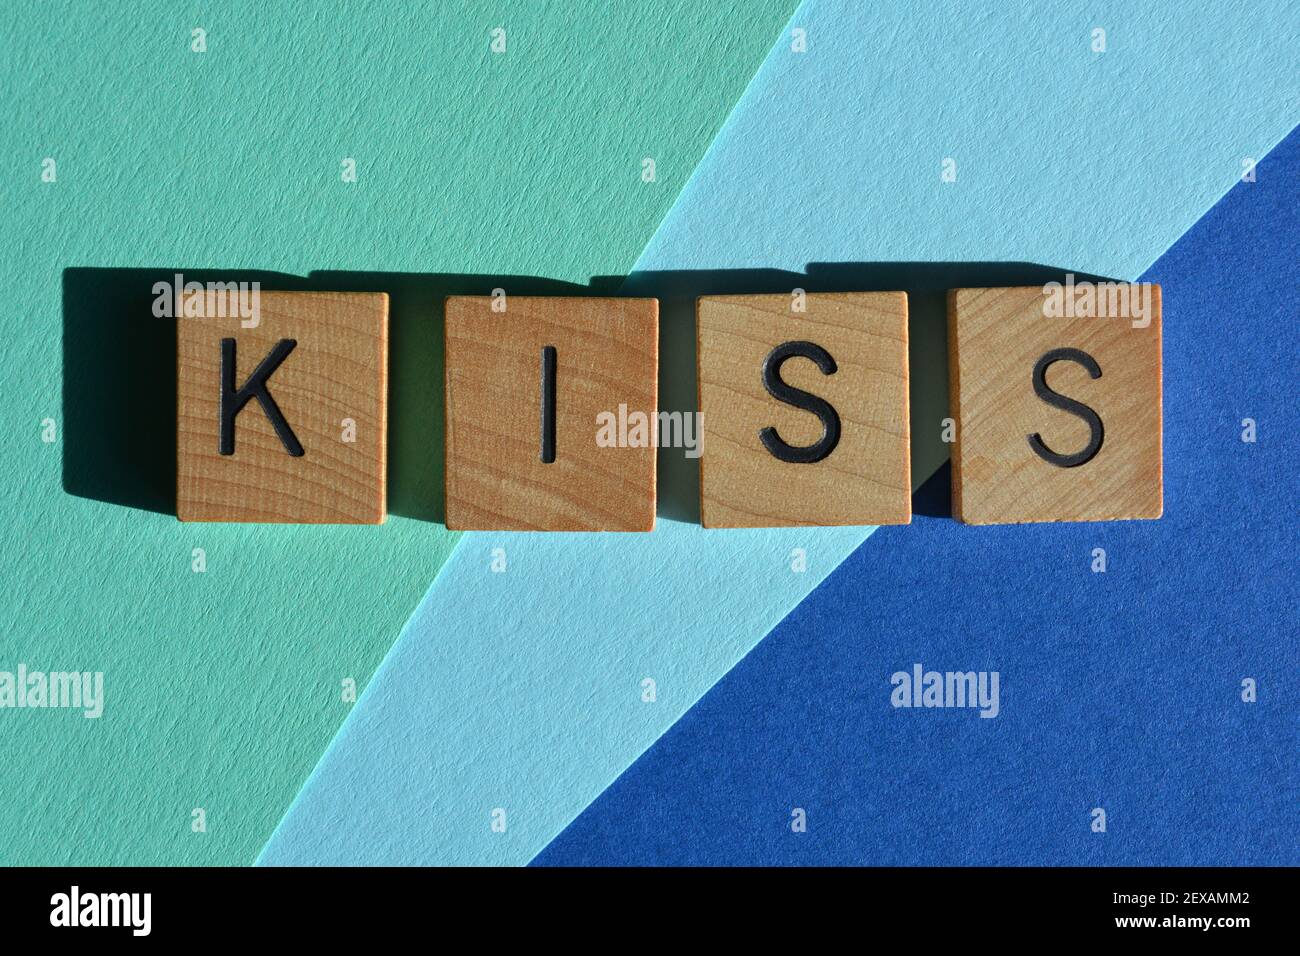 KISS internet slang acronym for Keep It Simple Stupid Stock Photo